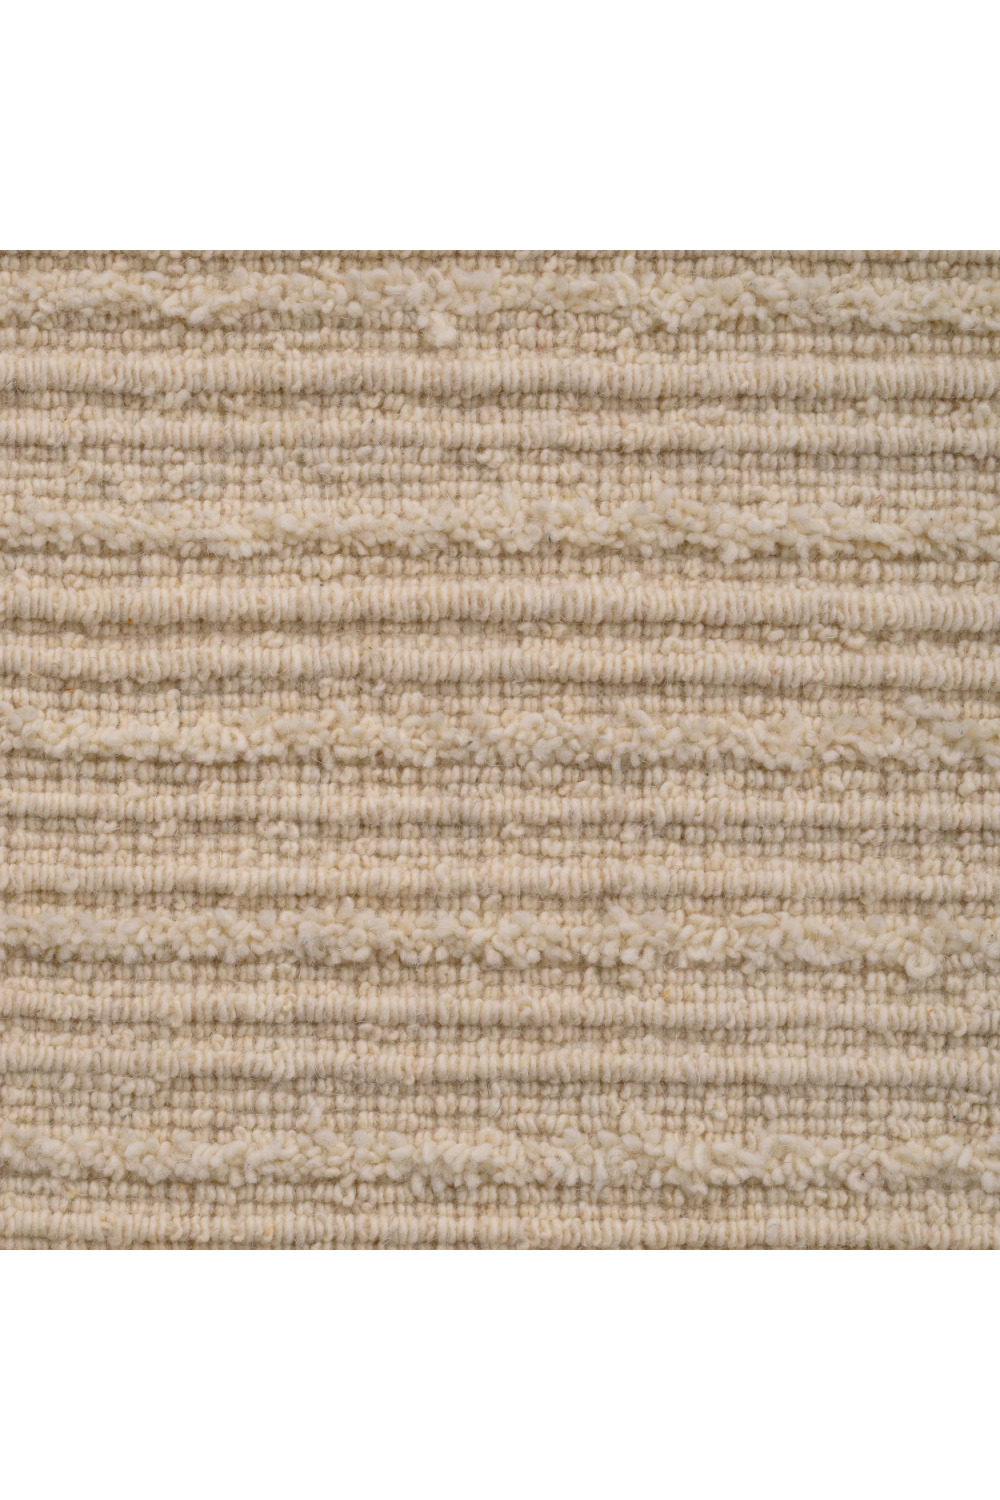 Ivory Wool Carpet 6'5 x 10' | Eichholtz Torrance | Oroa.com